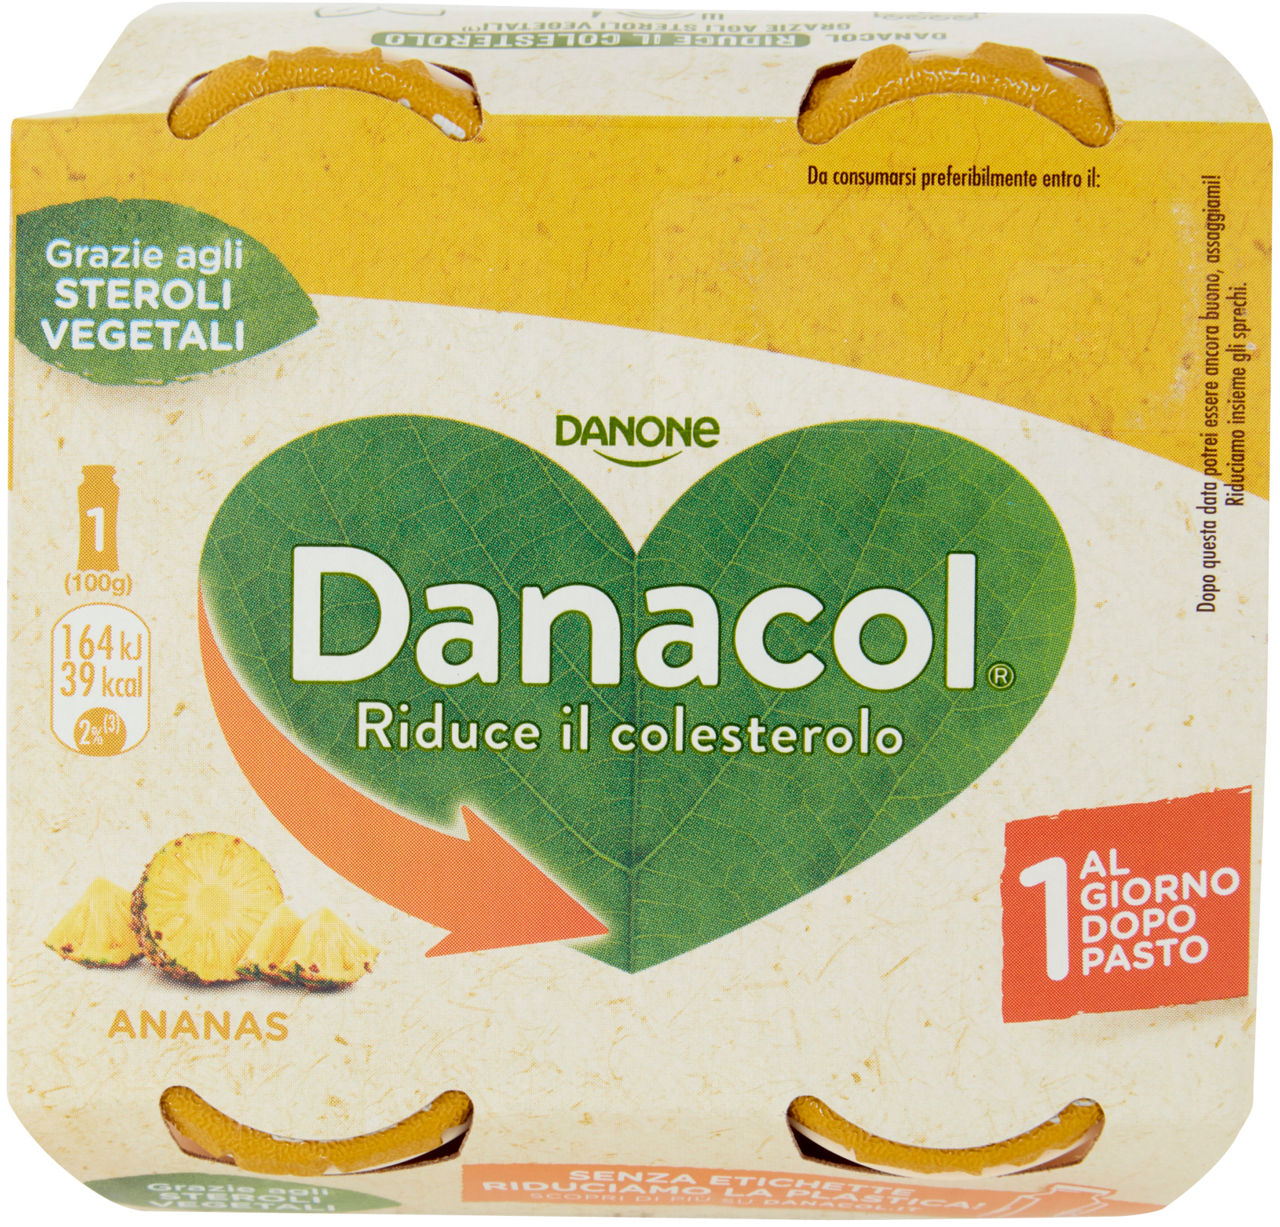 DANACOL DANONE ANTICOLESTEROLO ANANAS BTG 4X100G - 4